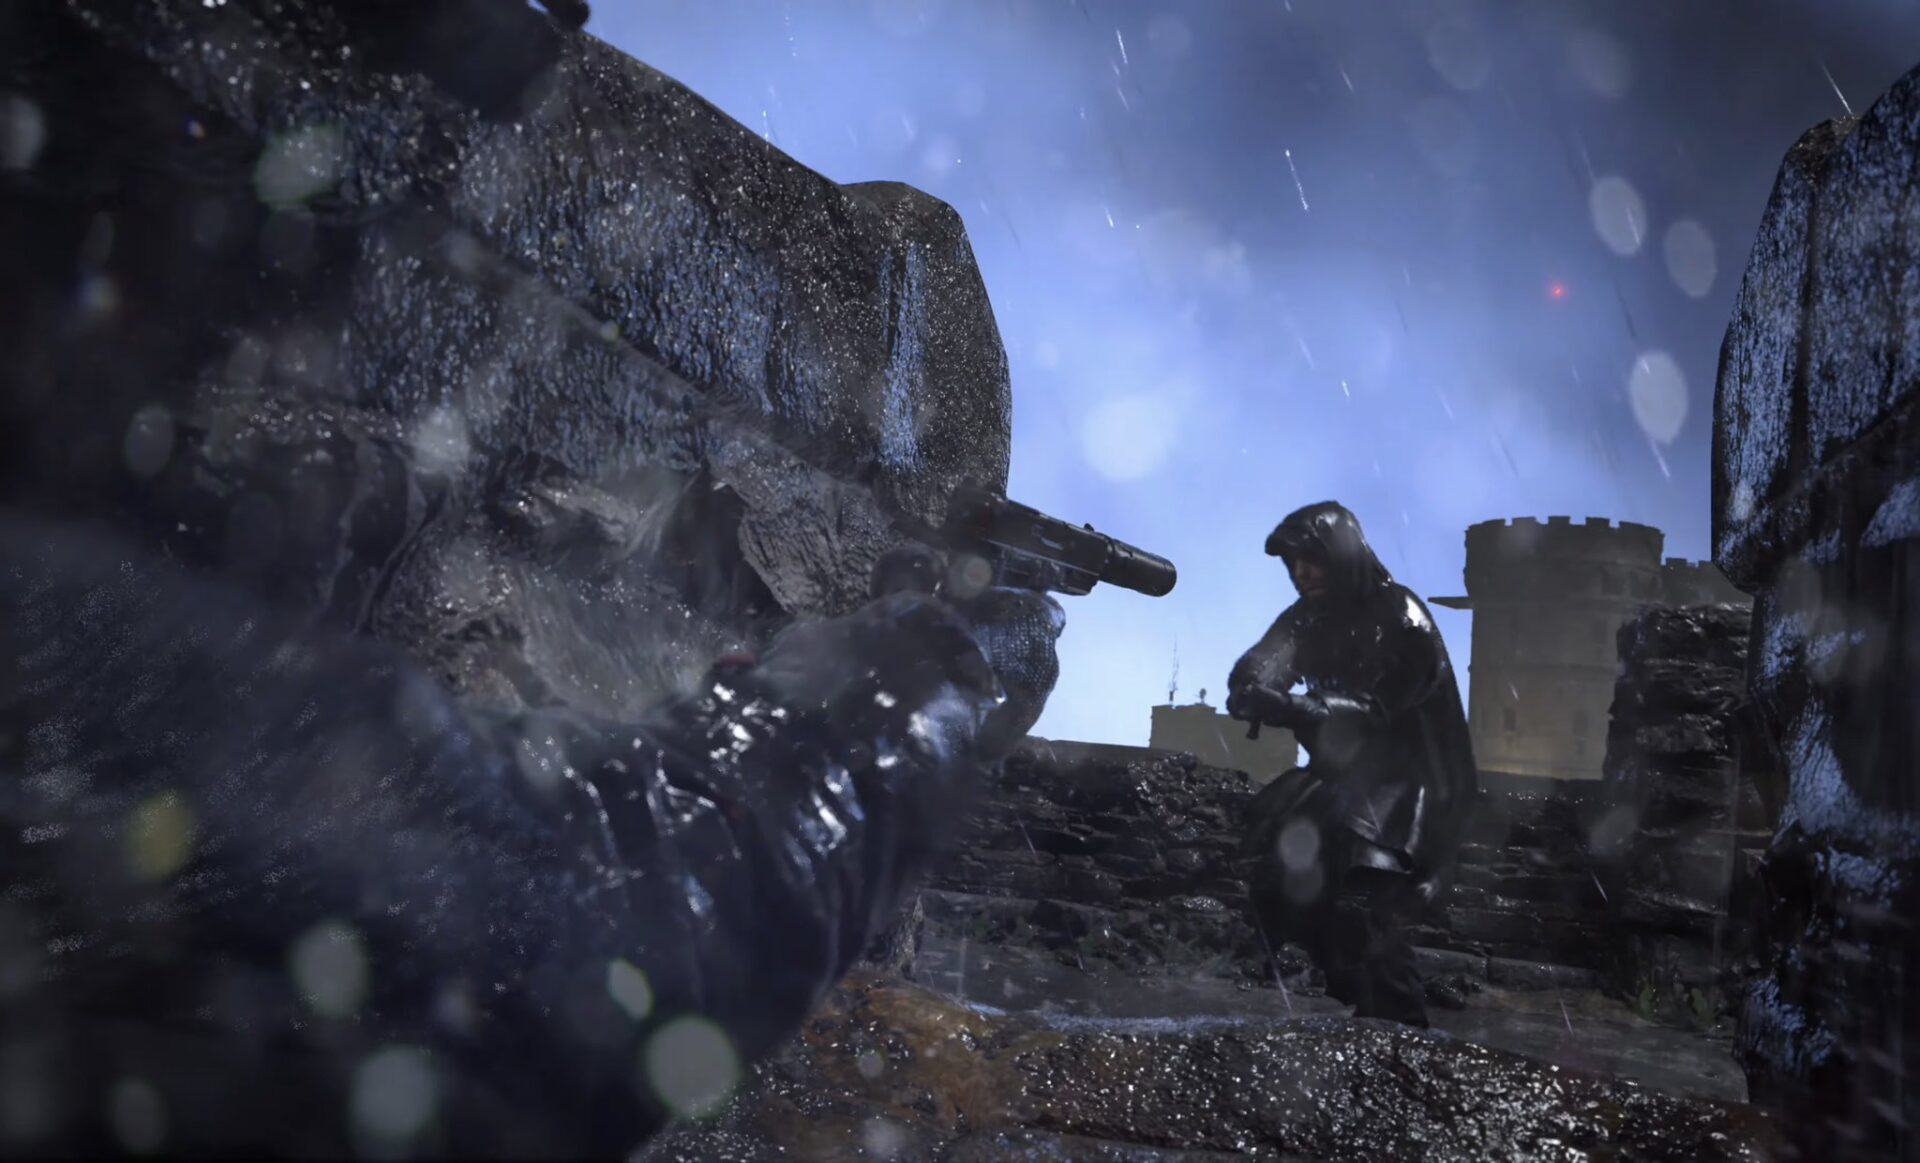 Call of Duty Modern Warfare 3 trailer confirms Verdansk return